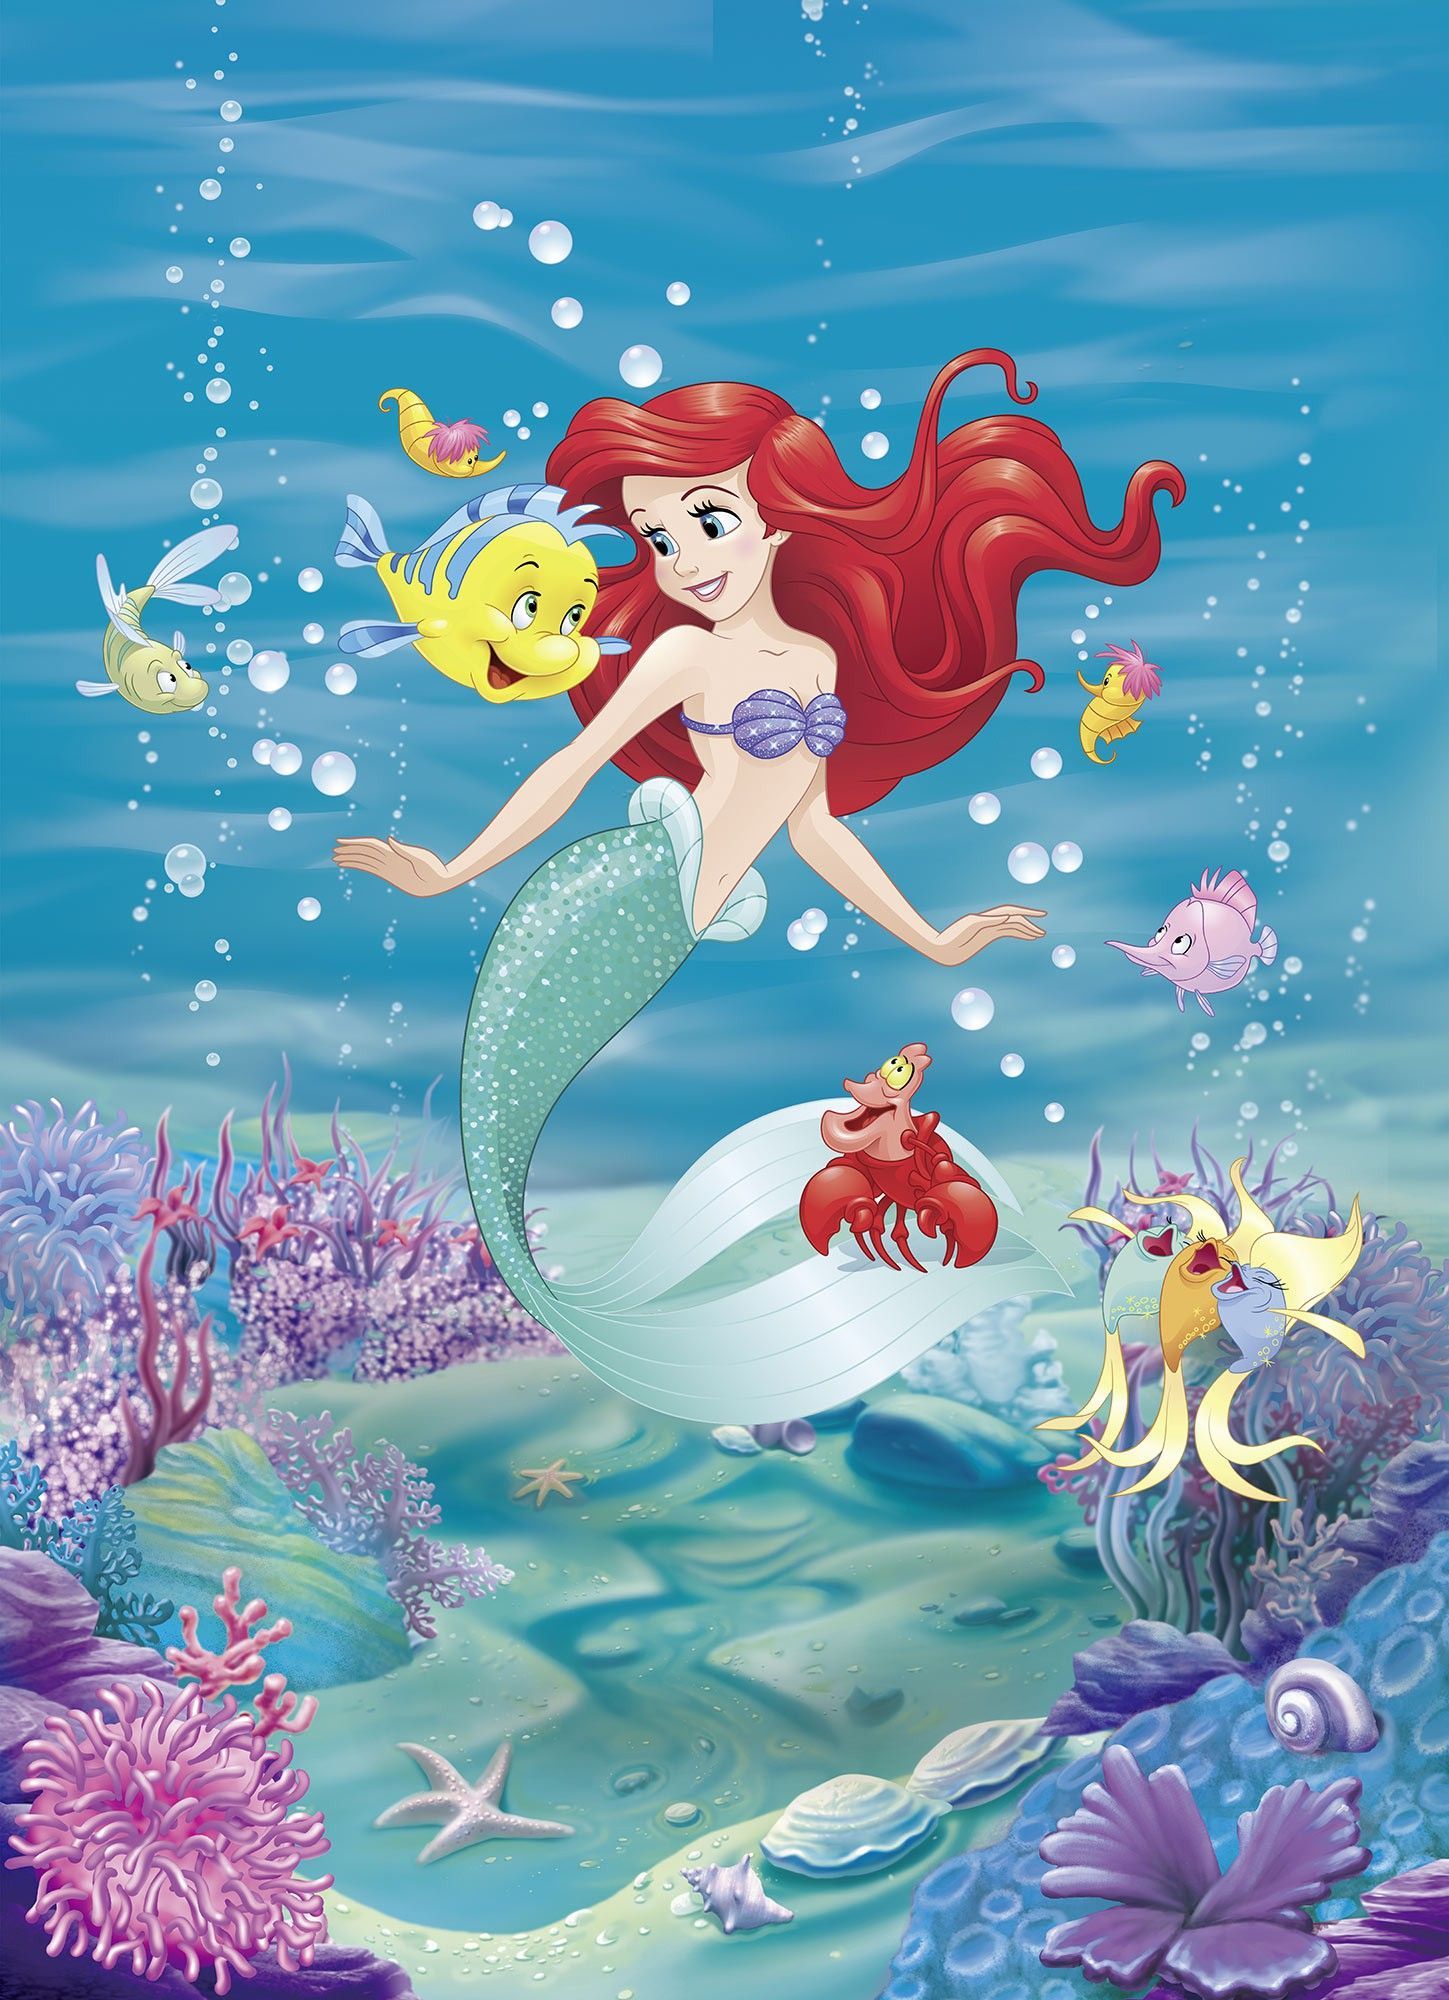 Photo wallpaper Ariel Disney girl's bedroom Mermaid wall mural giant poster